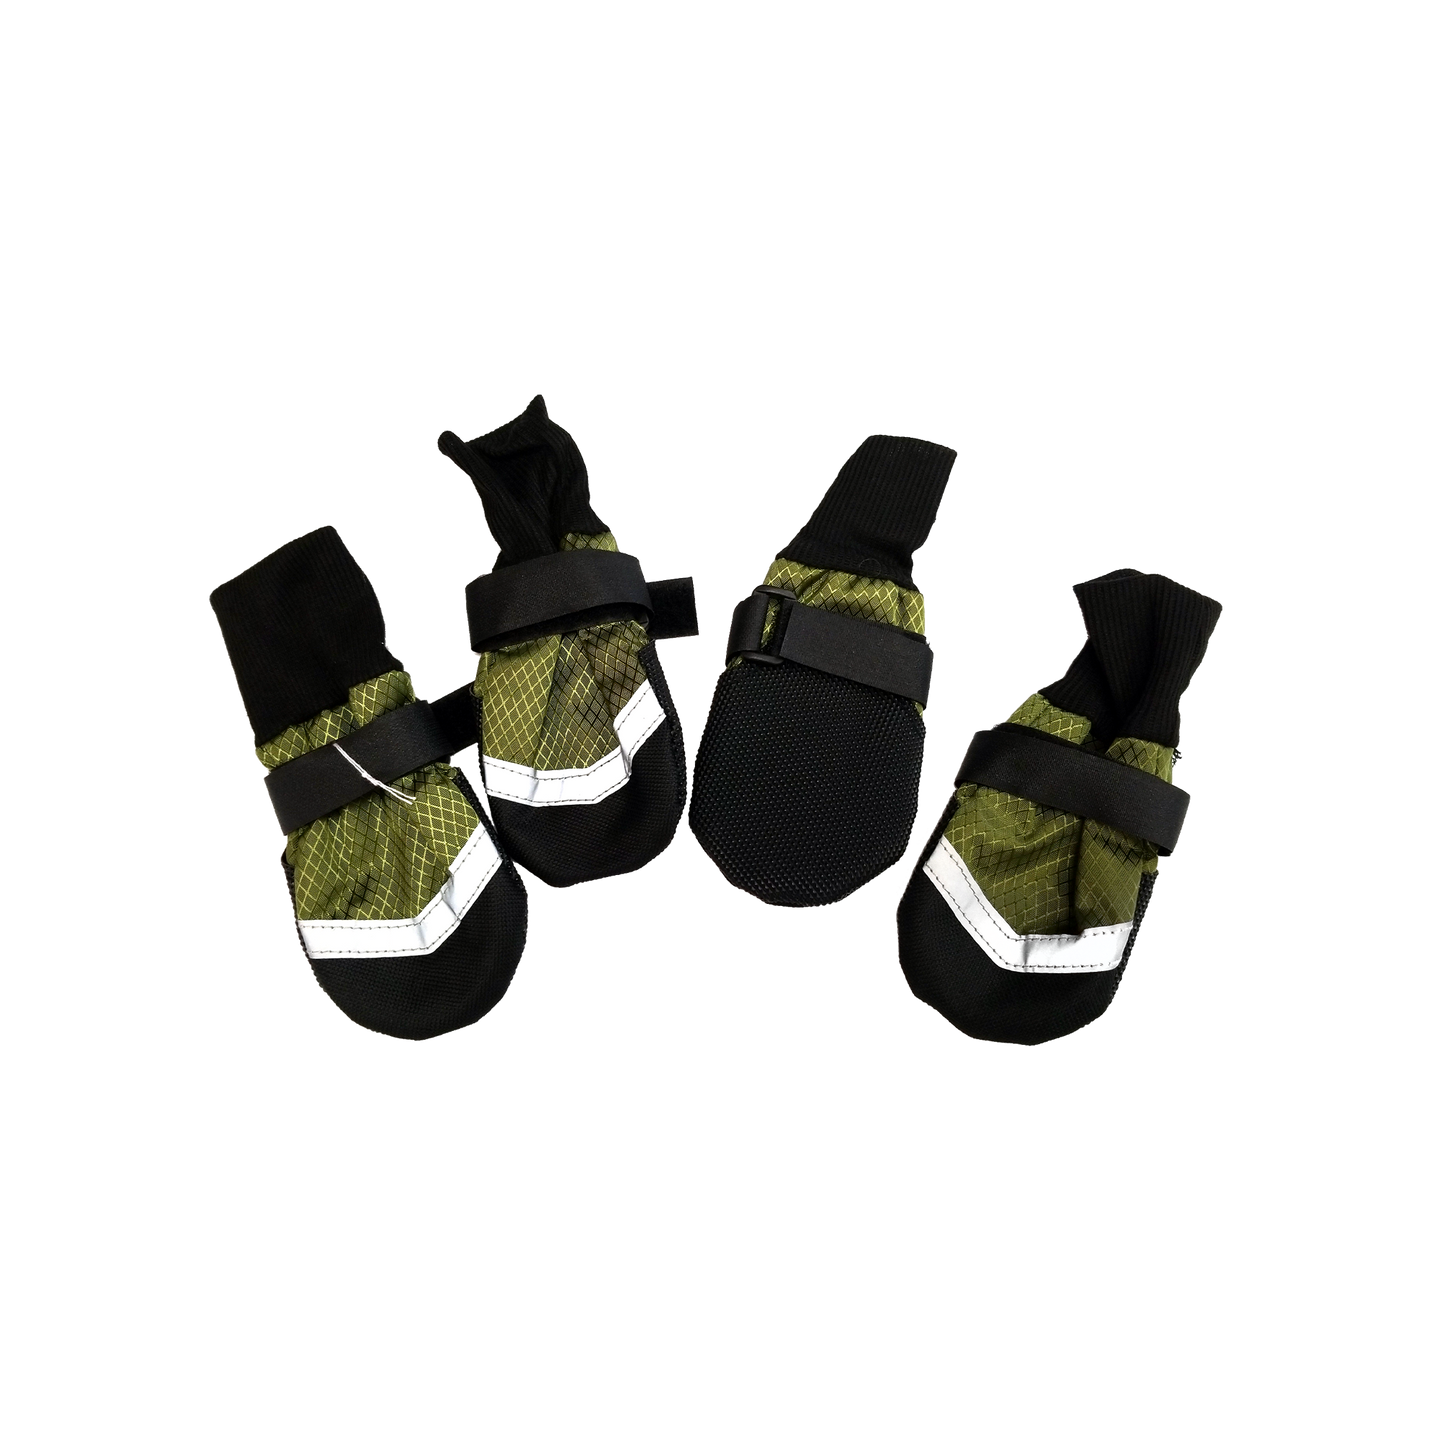 Winter Dog Boots, Non-Slip Winter Sole & Reflective Strip, Green